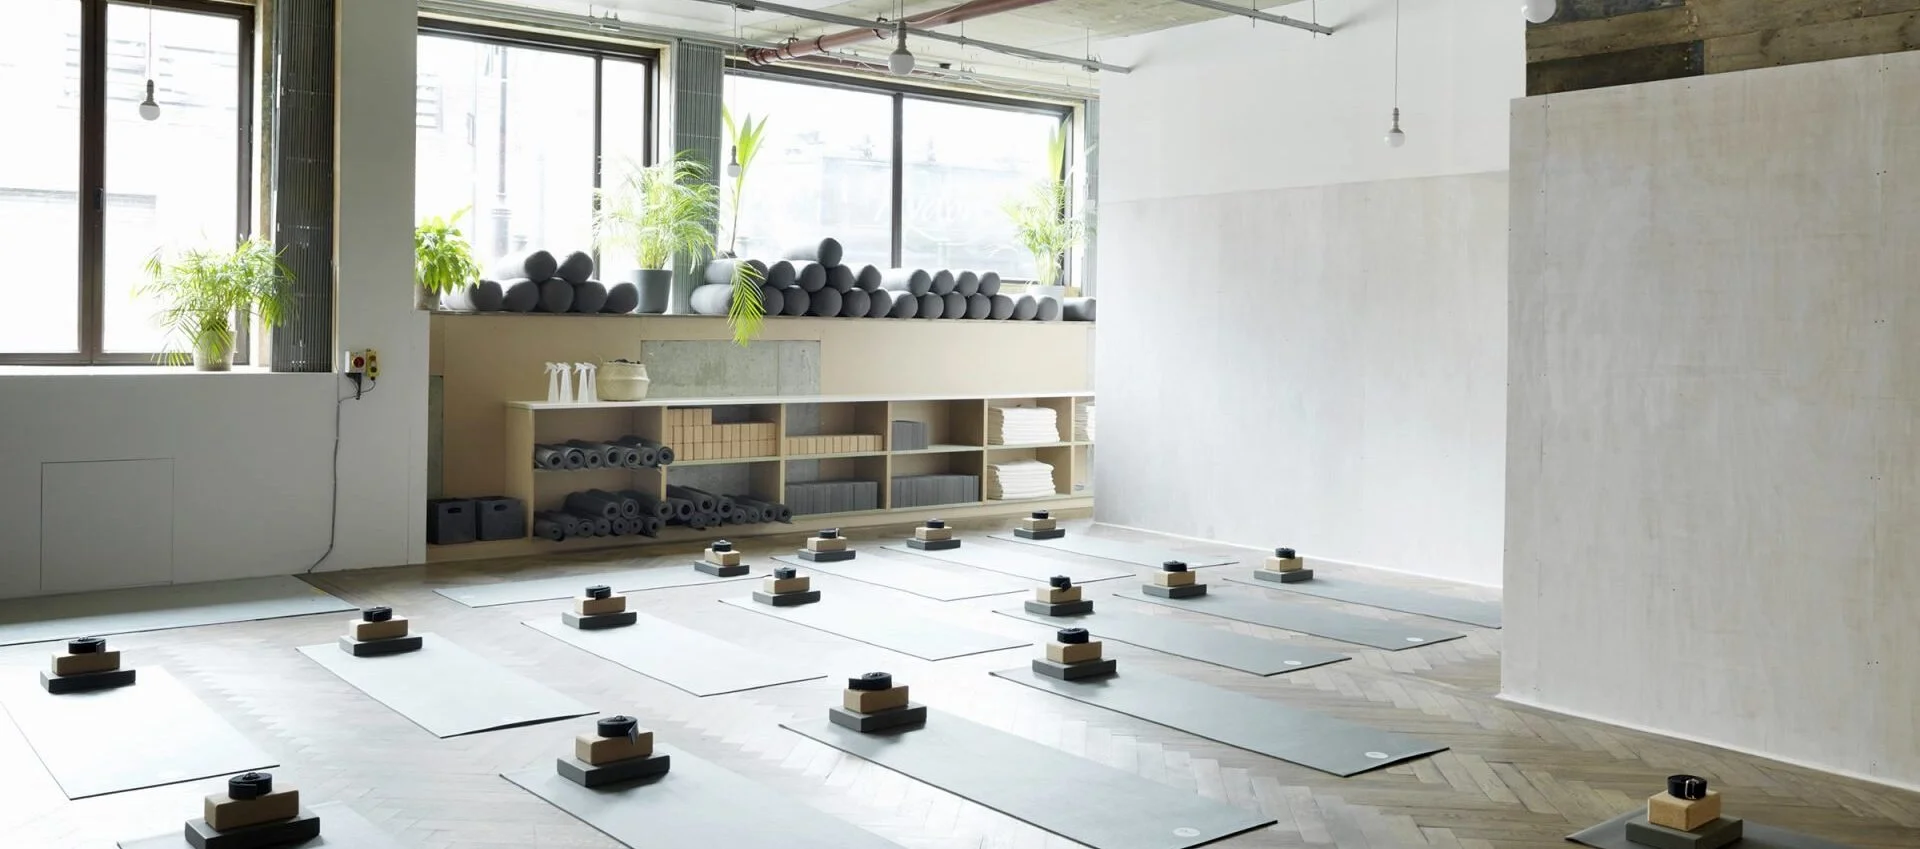 5 London Yoga Studios you need to visit – SILOU